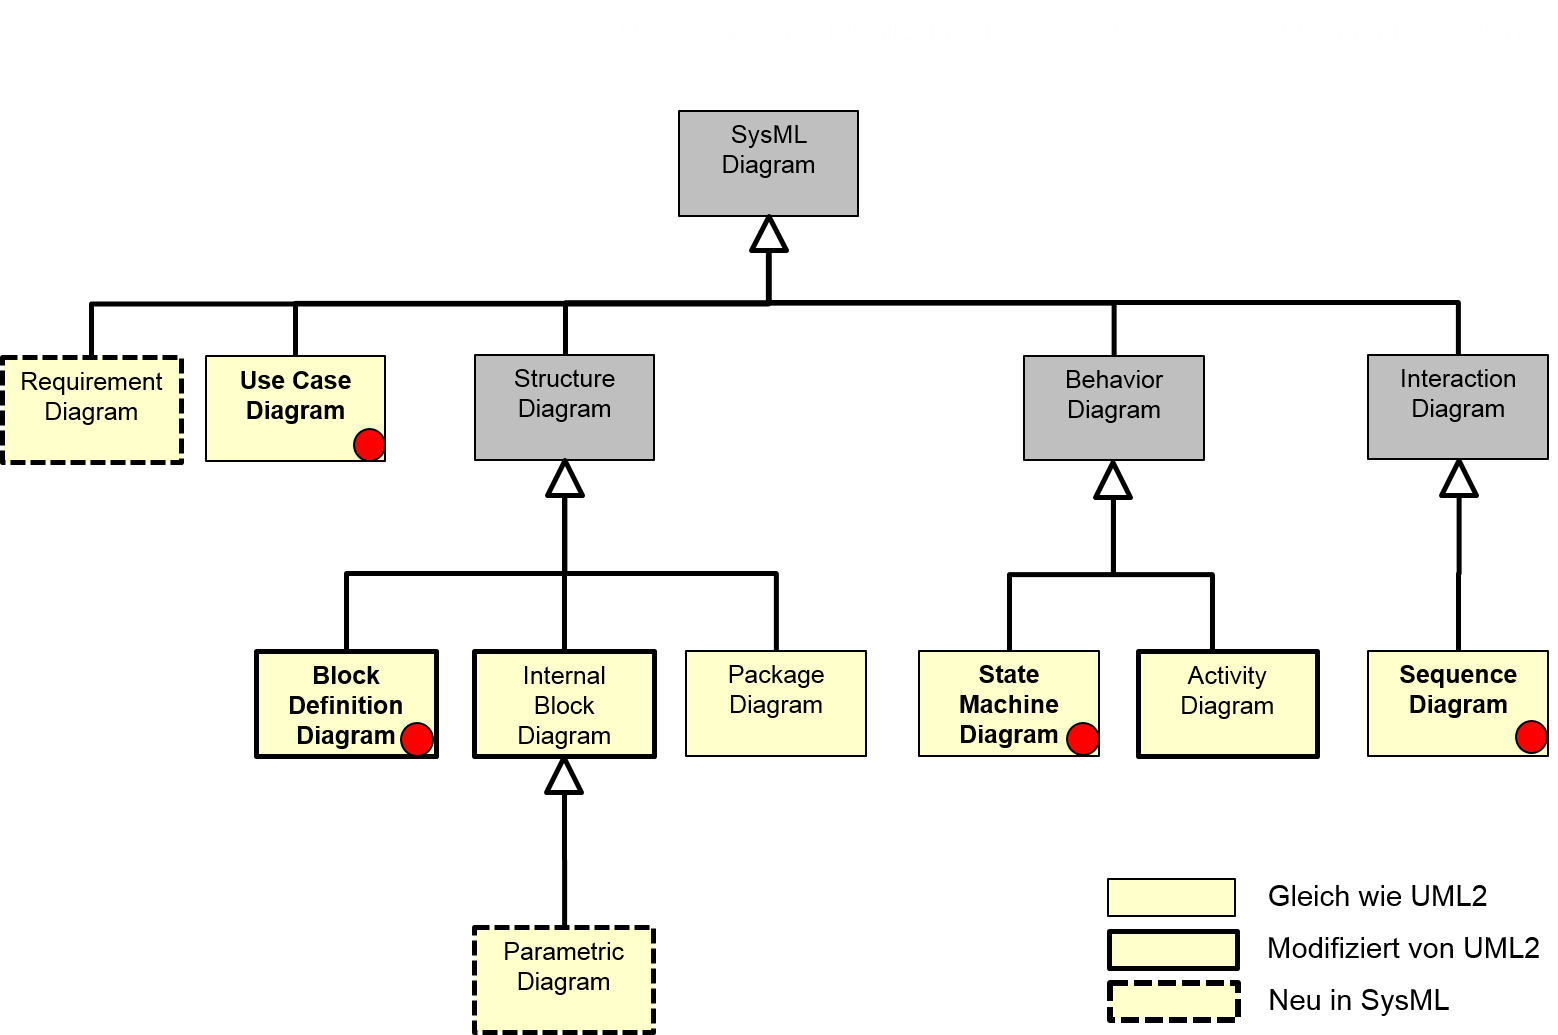 SysML Systems Engineering Diagrammübersicht